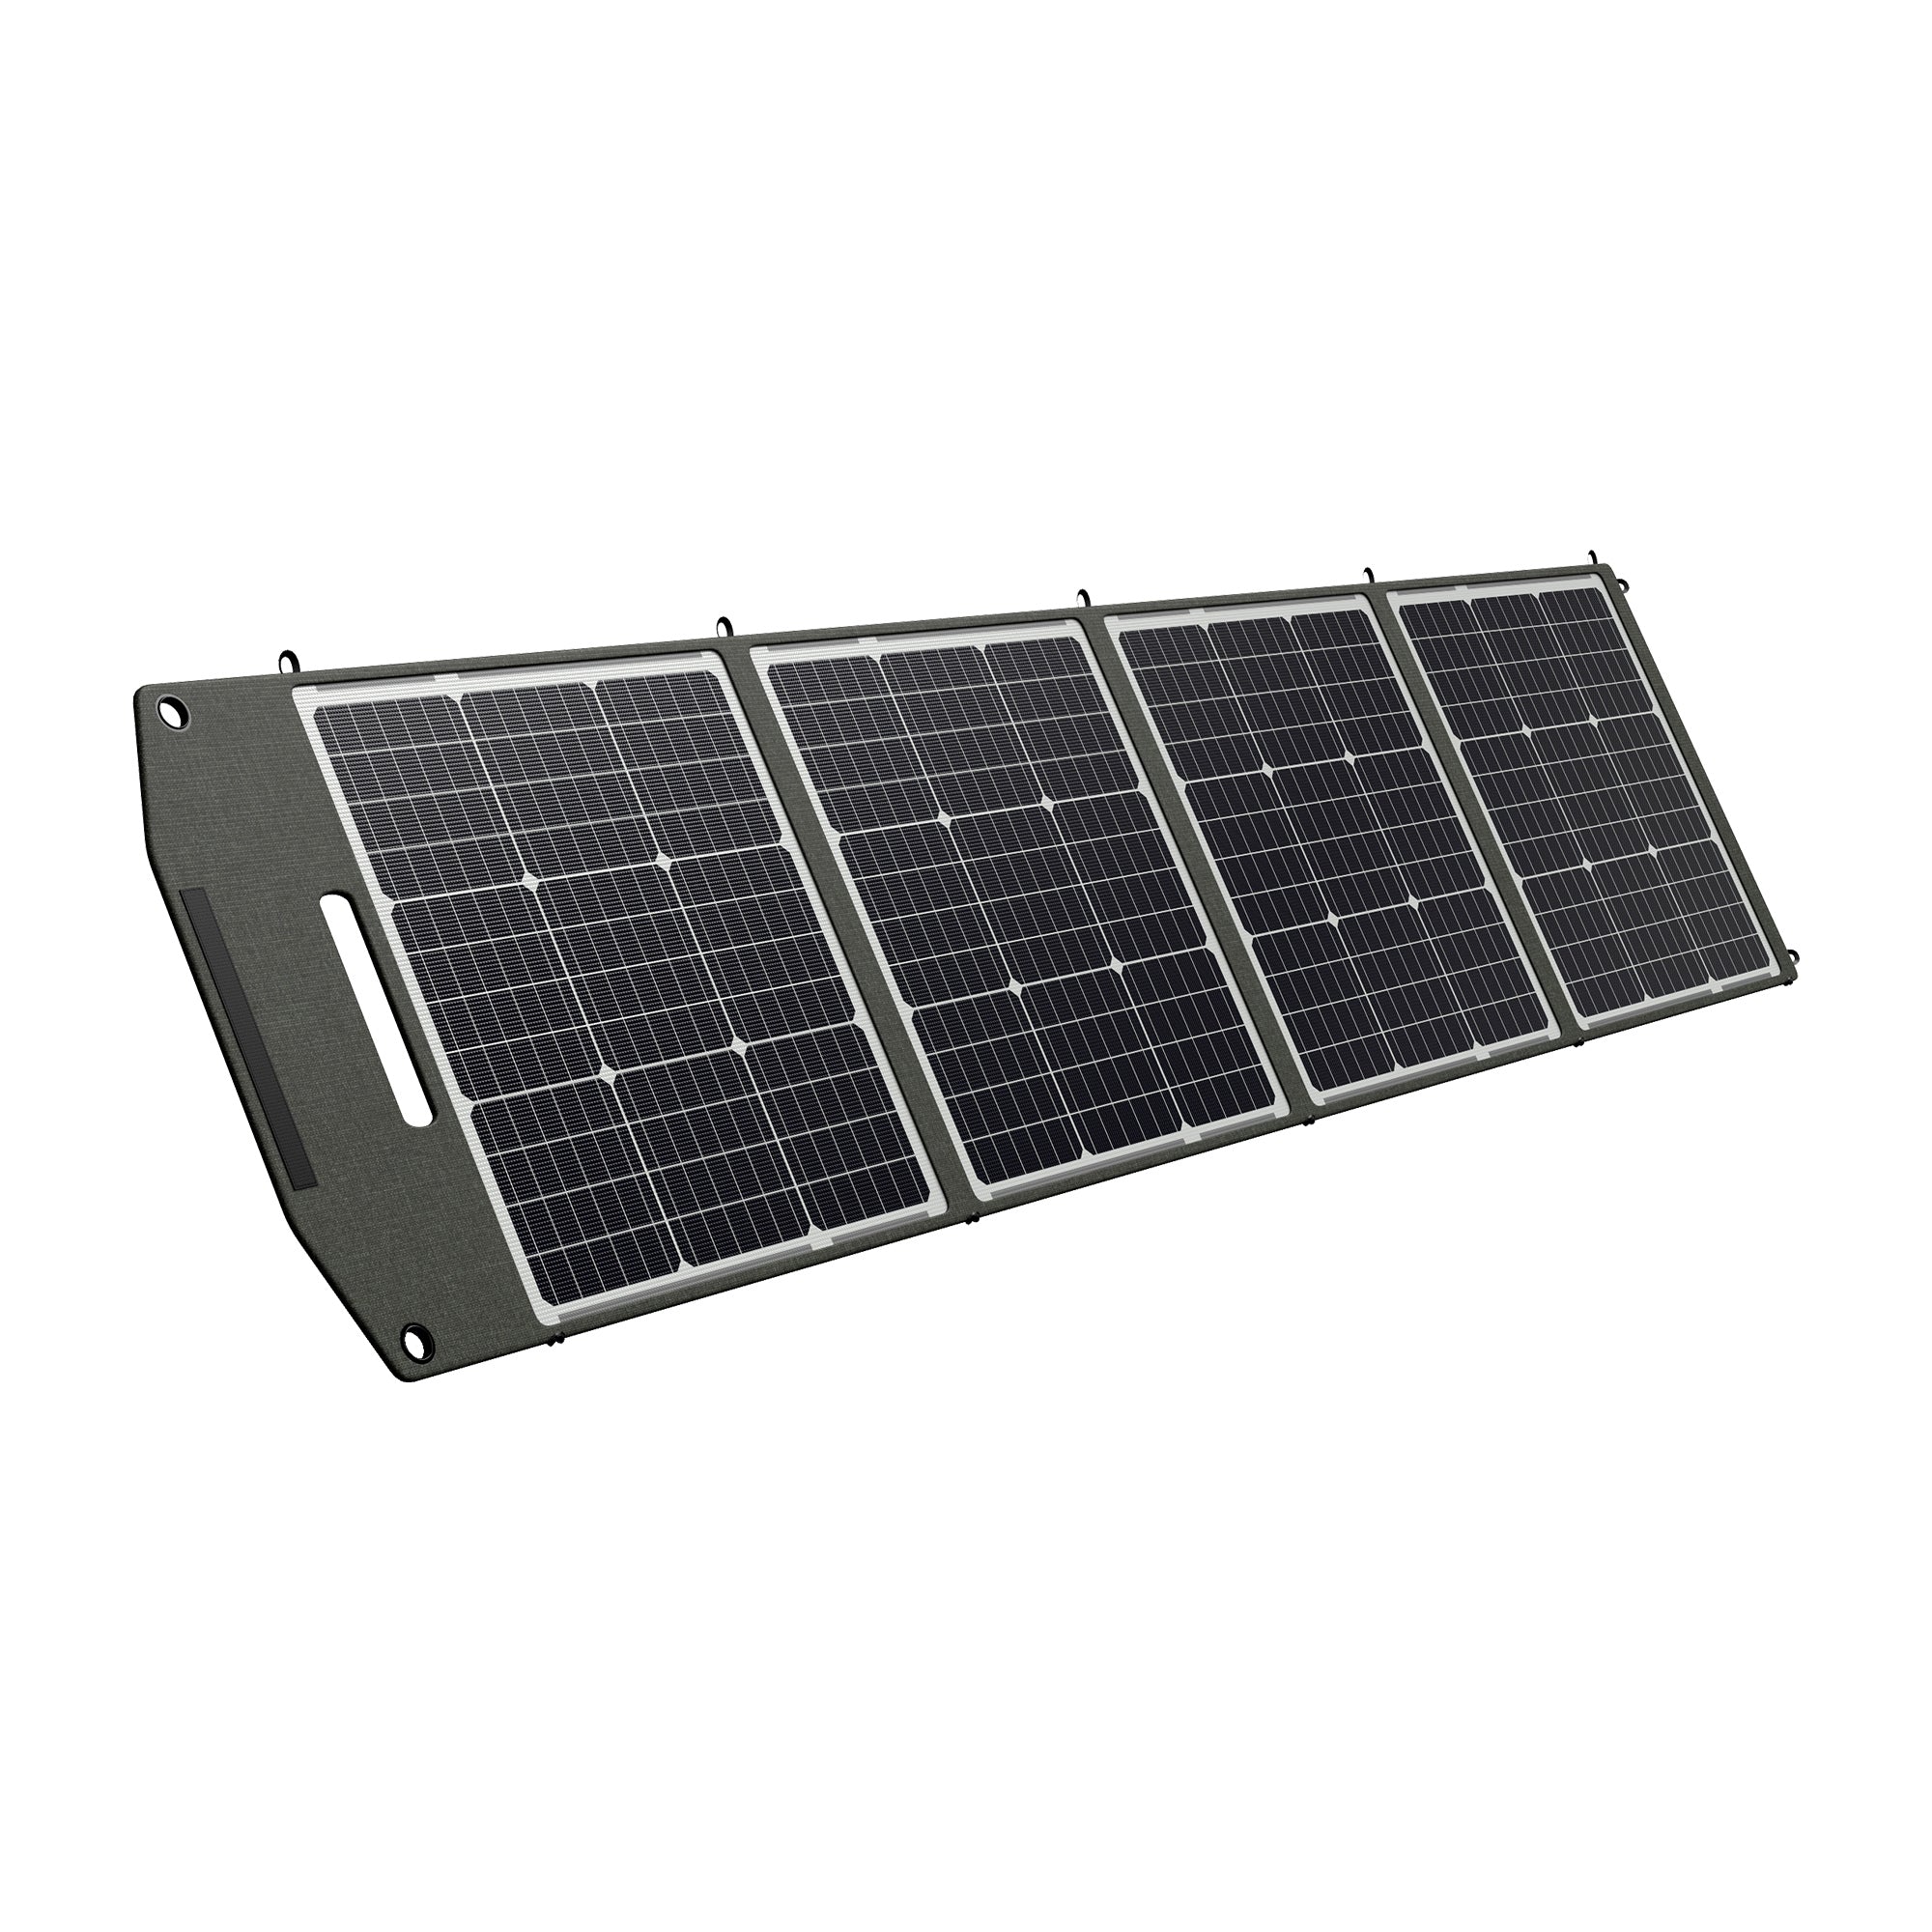 DBS200S Tragbares Solarpanel | 200W